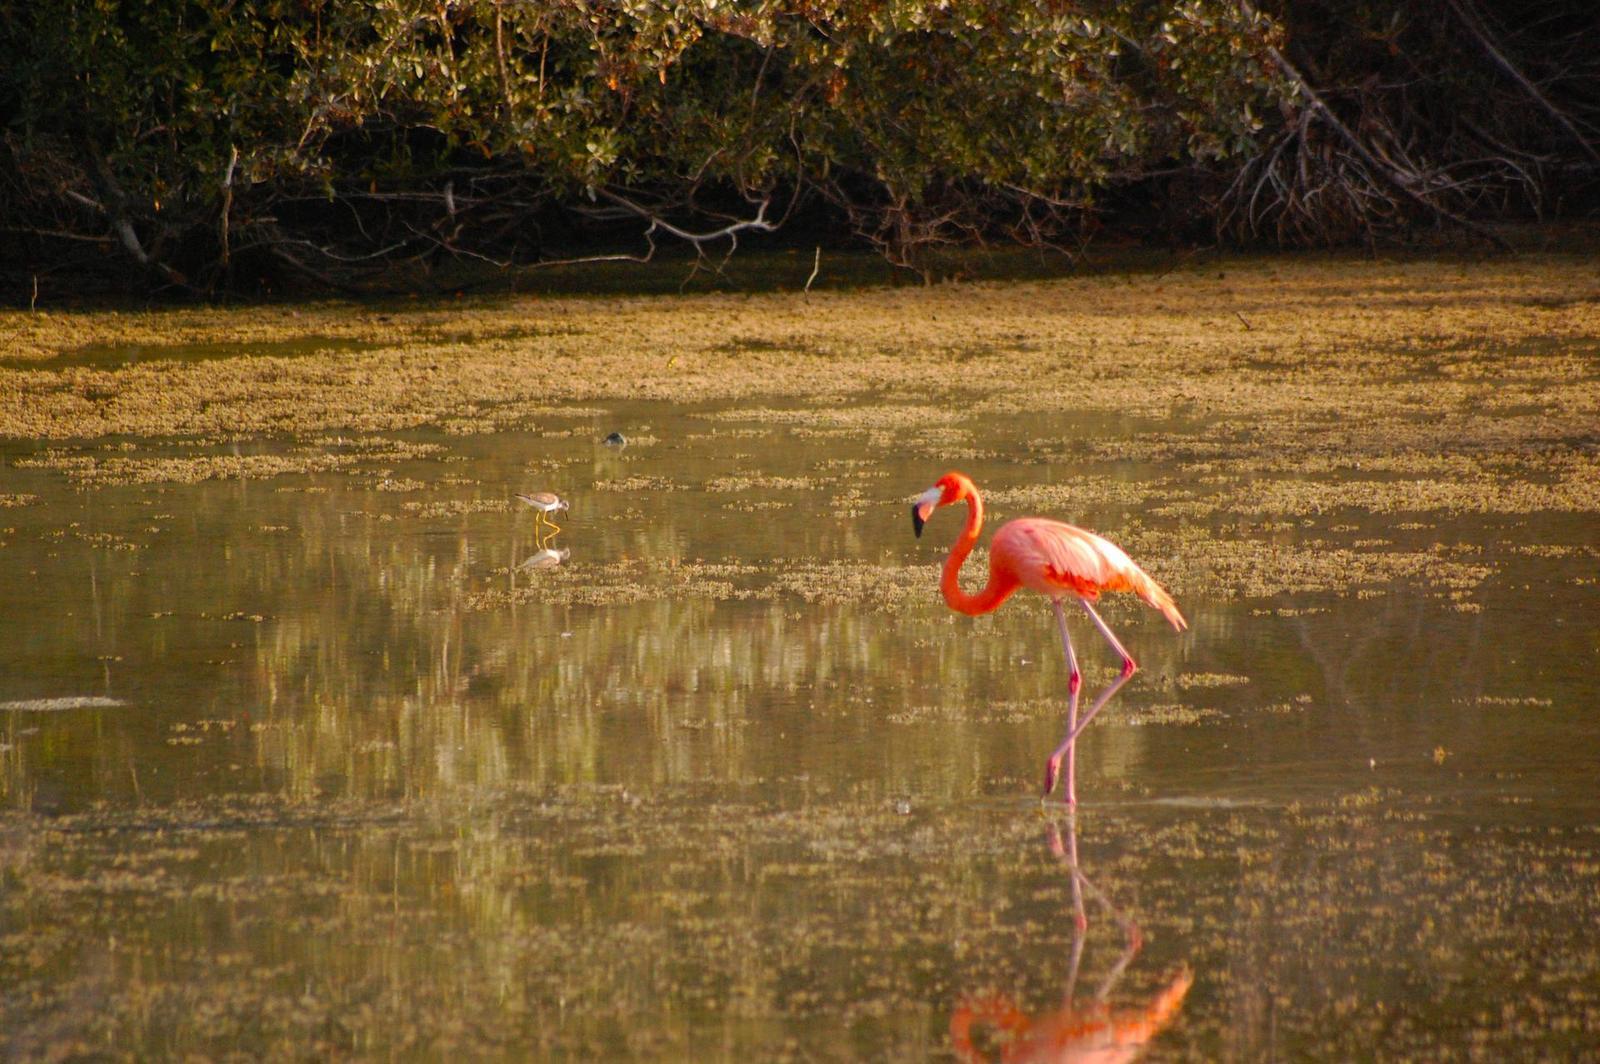 American Flamingo Photo by Ted Goshulak